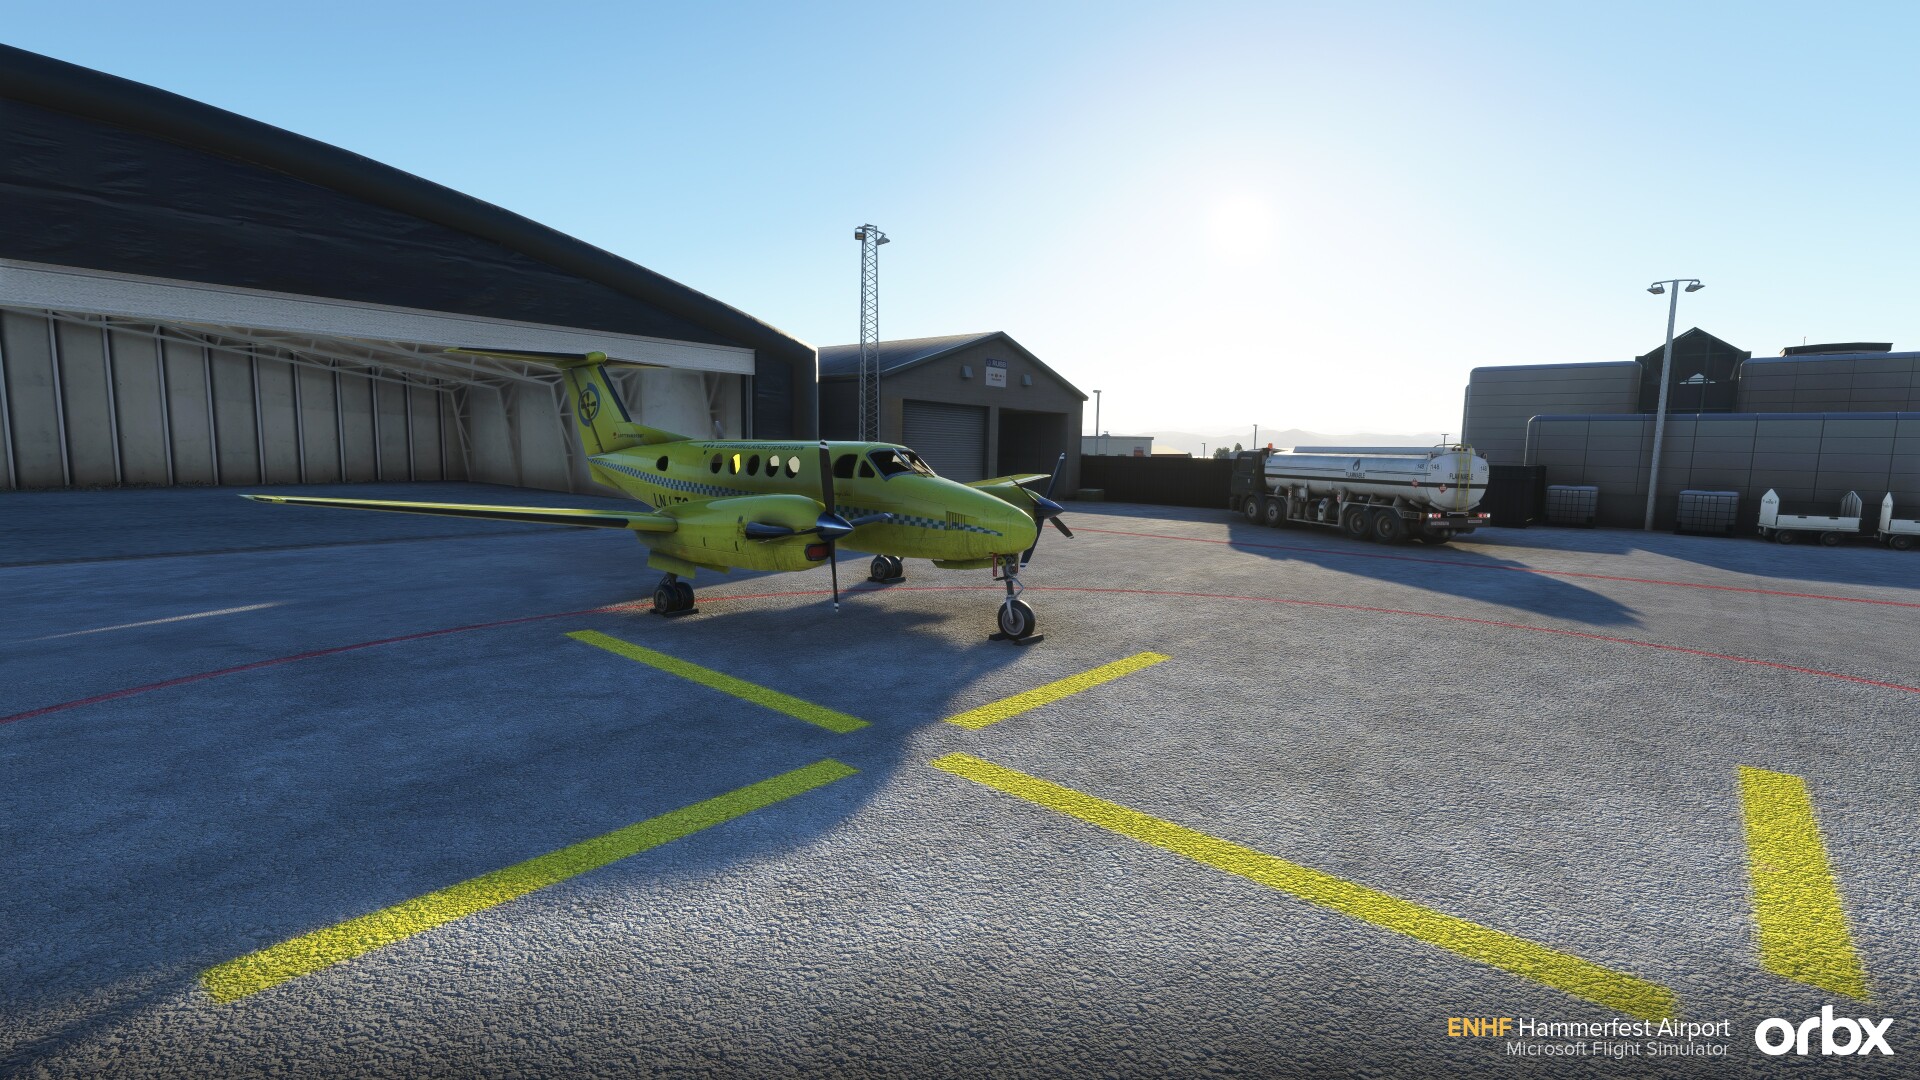 Orbx Announces Hammerfest Airport for MSFS - Microsoft Flight Simulator, Orbx